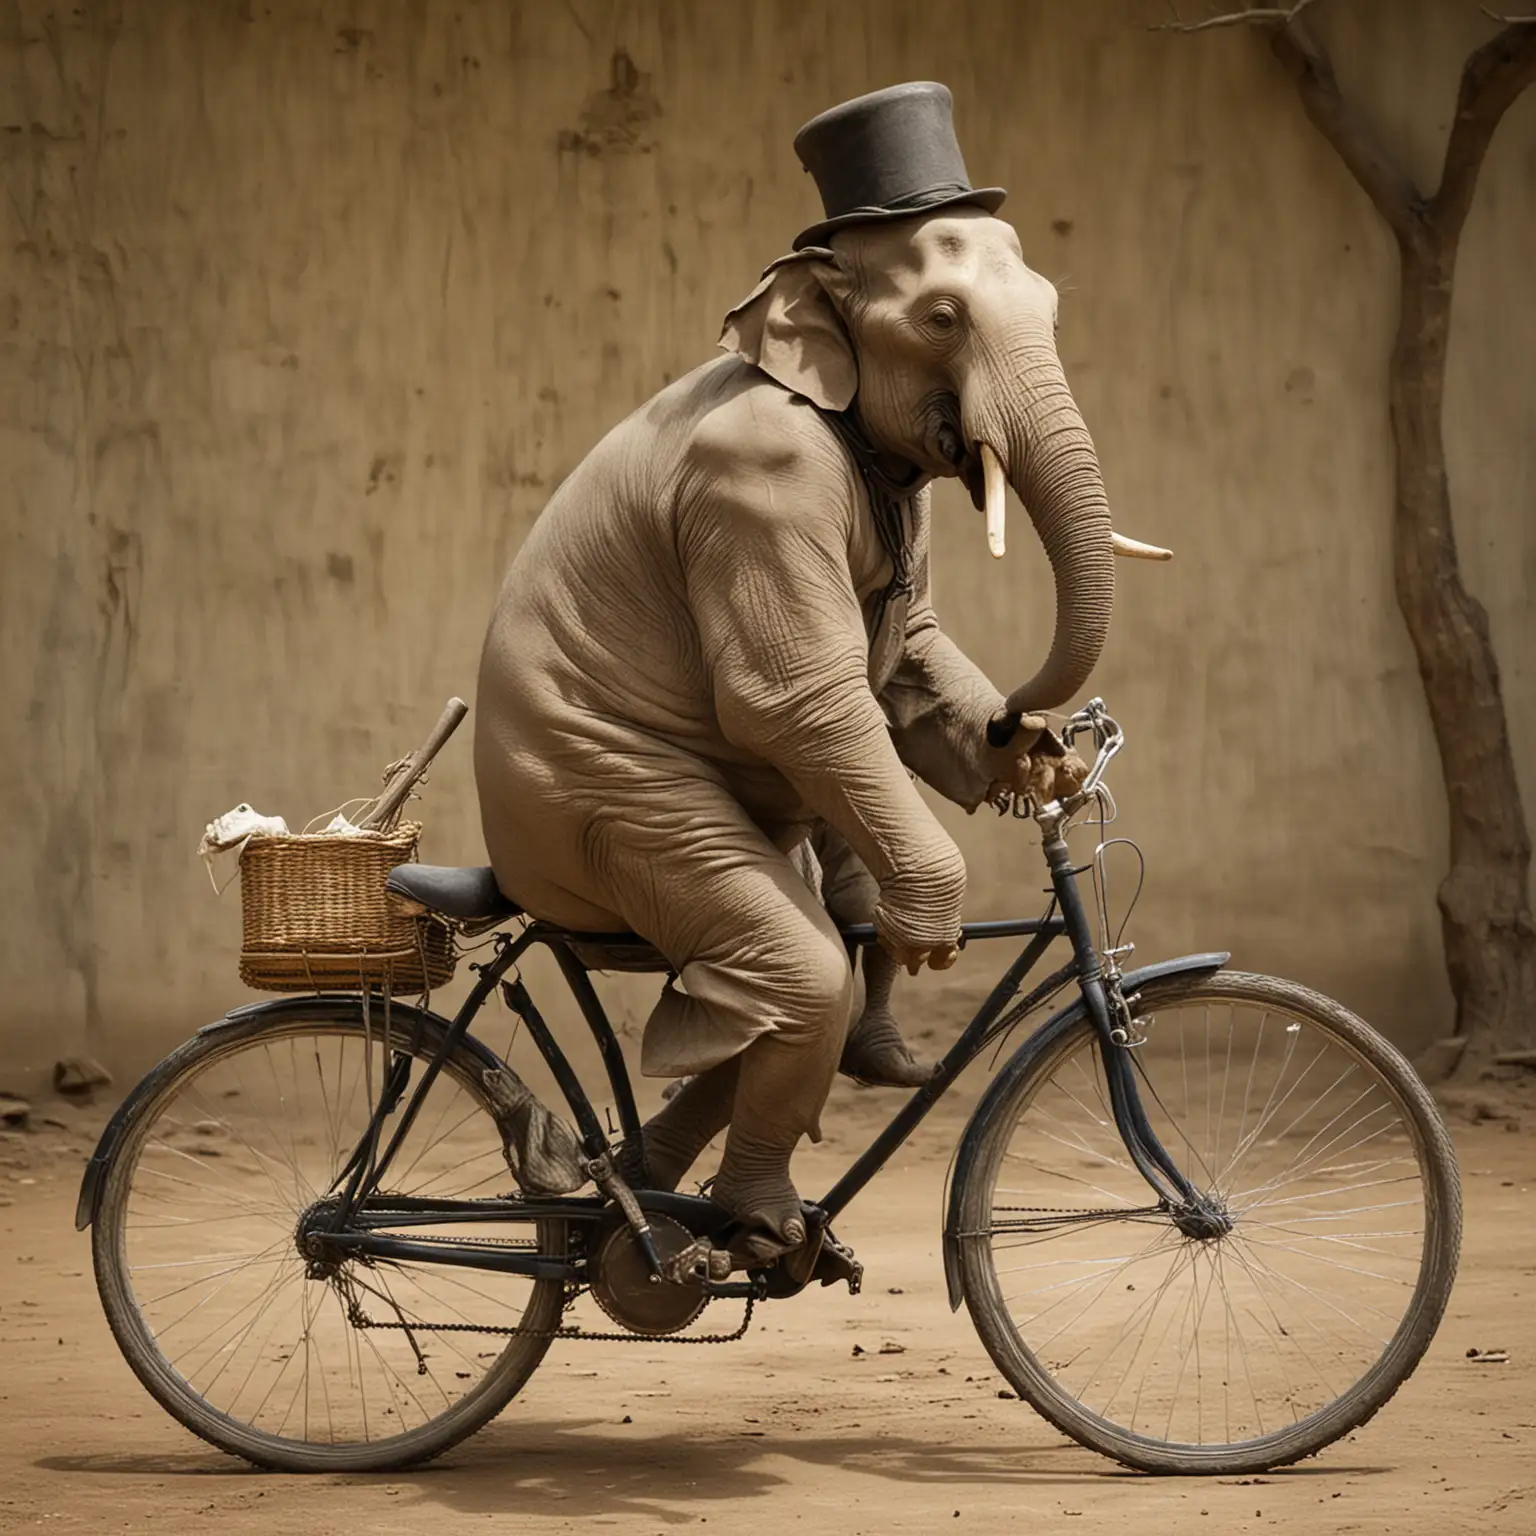 Elephant Man riding a bicycle